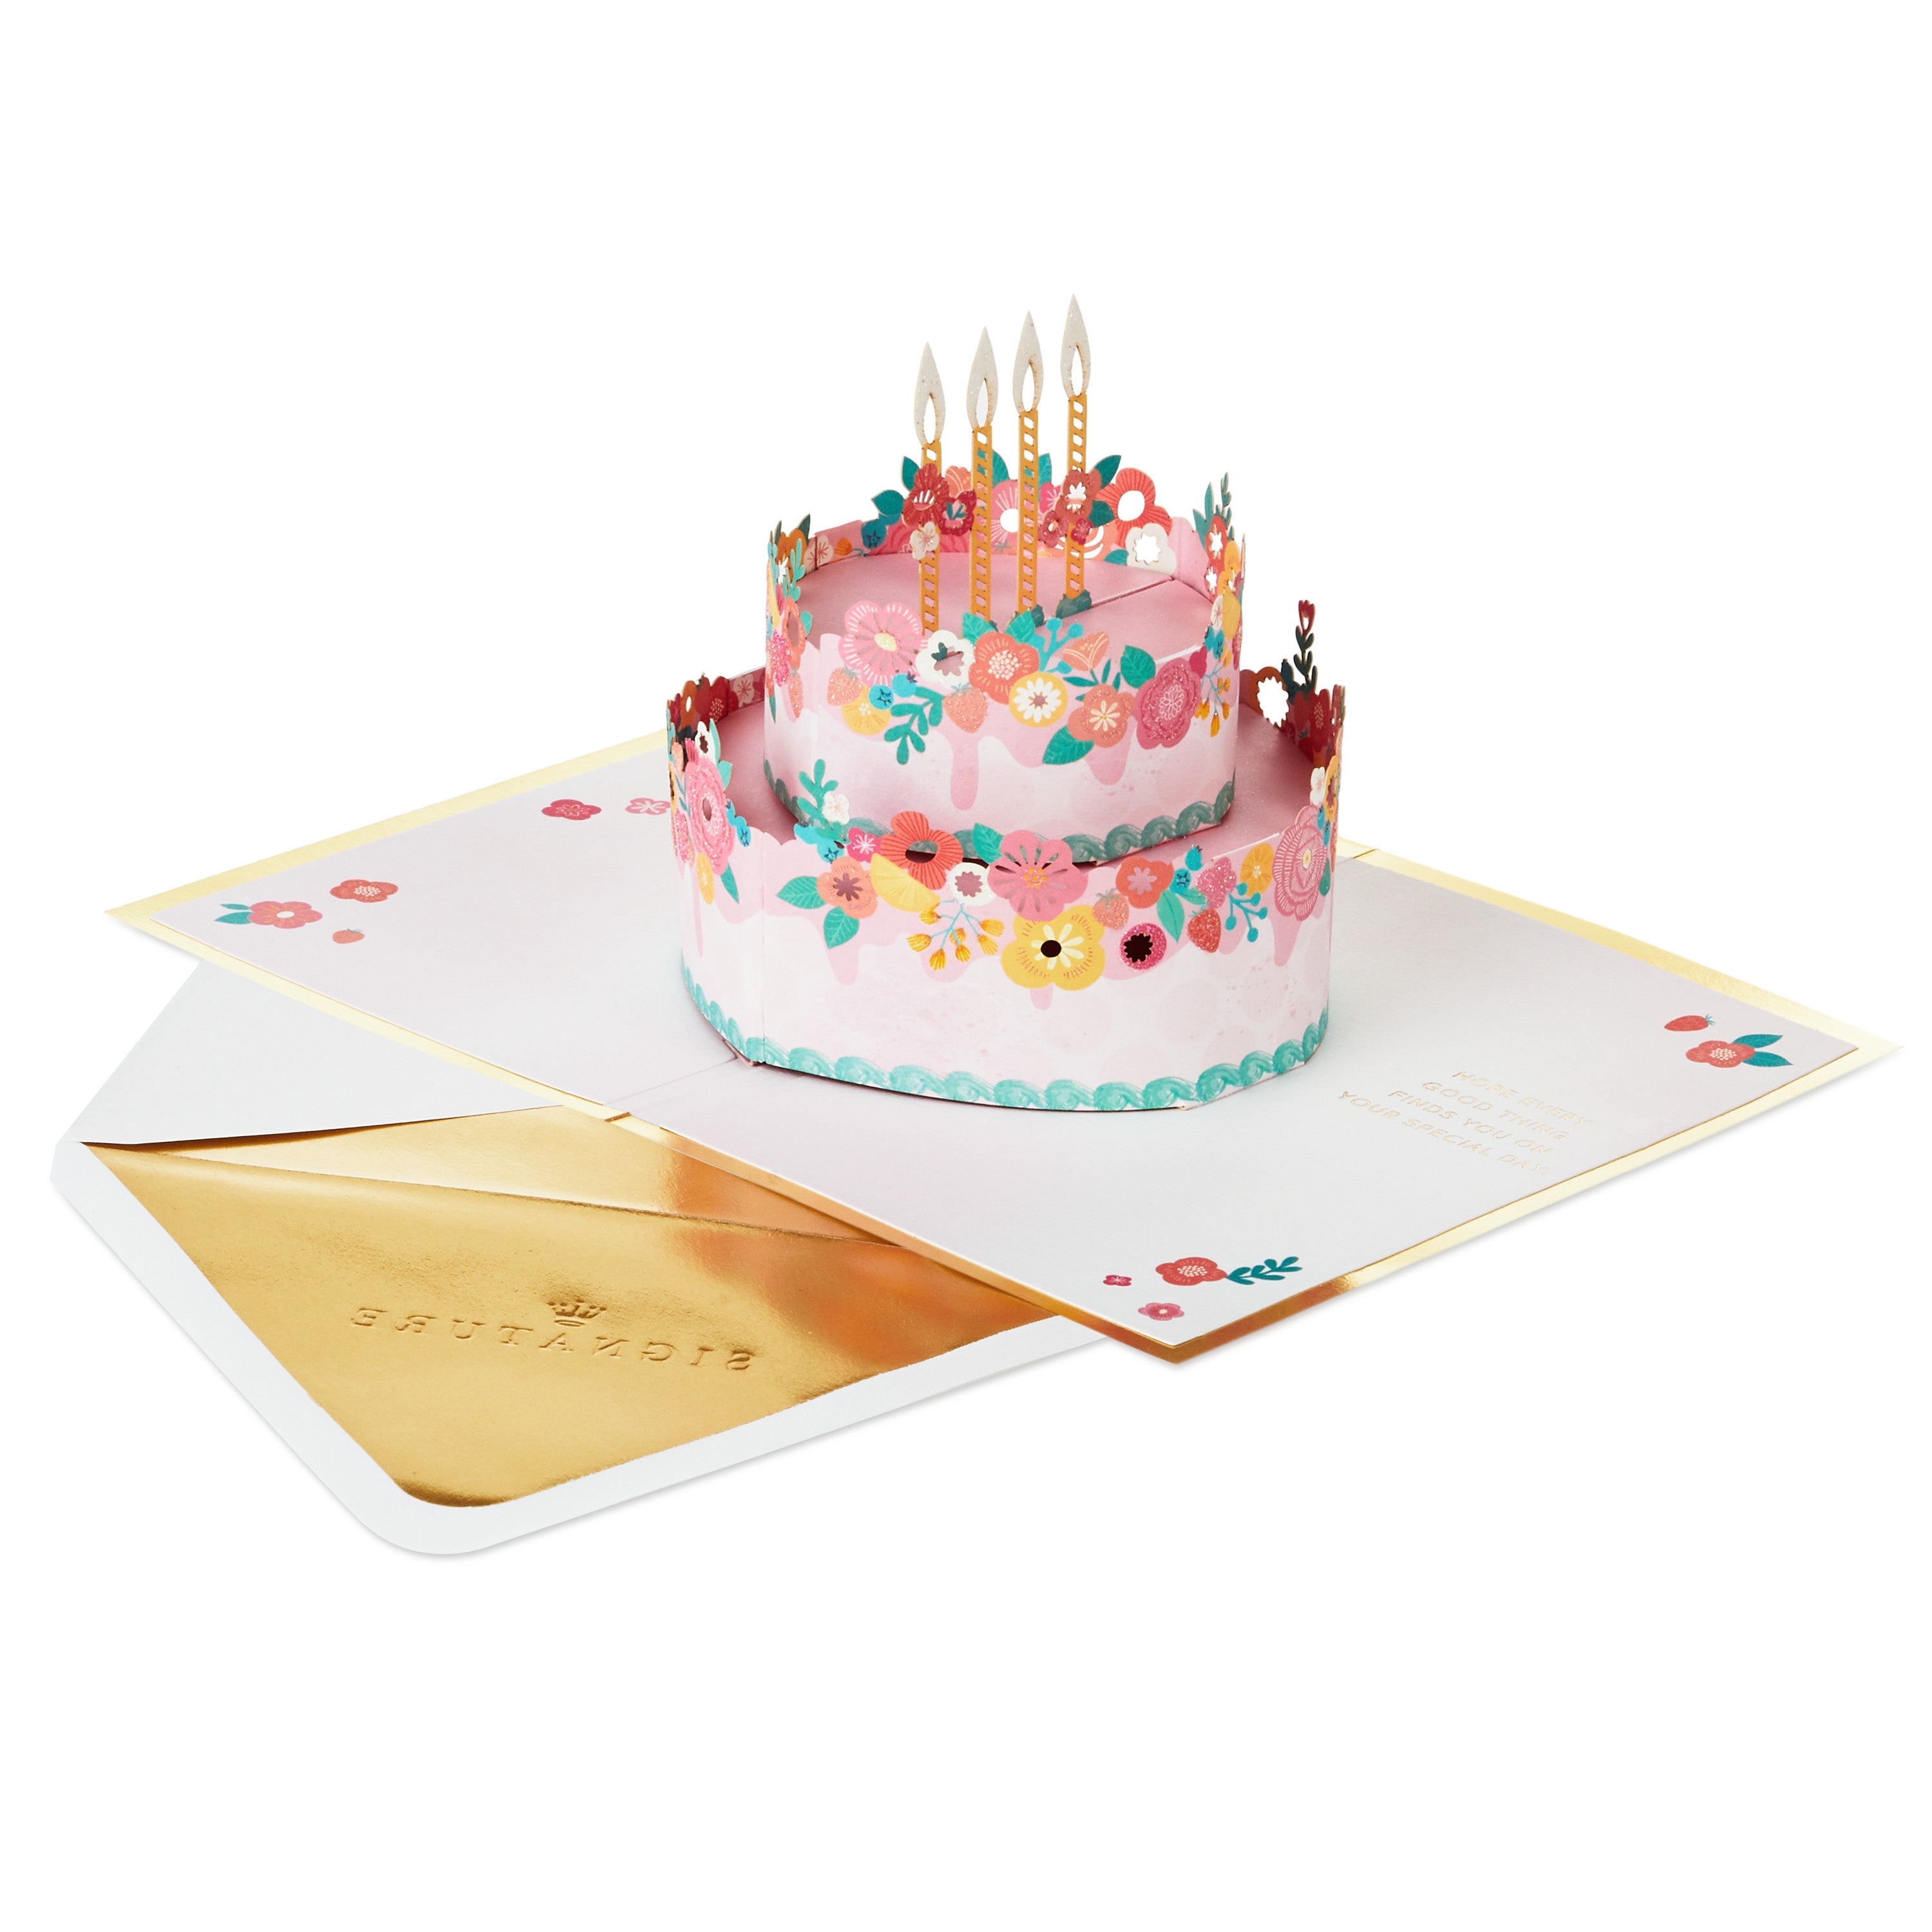  Signature Paper Wonder Pop Up Birthday Card for Women (Floral Birthday Cake)